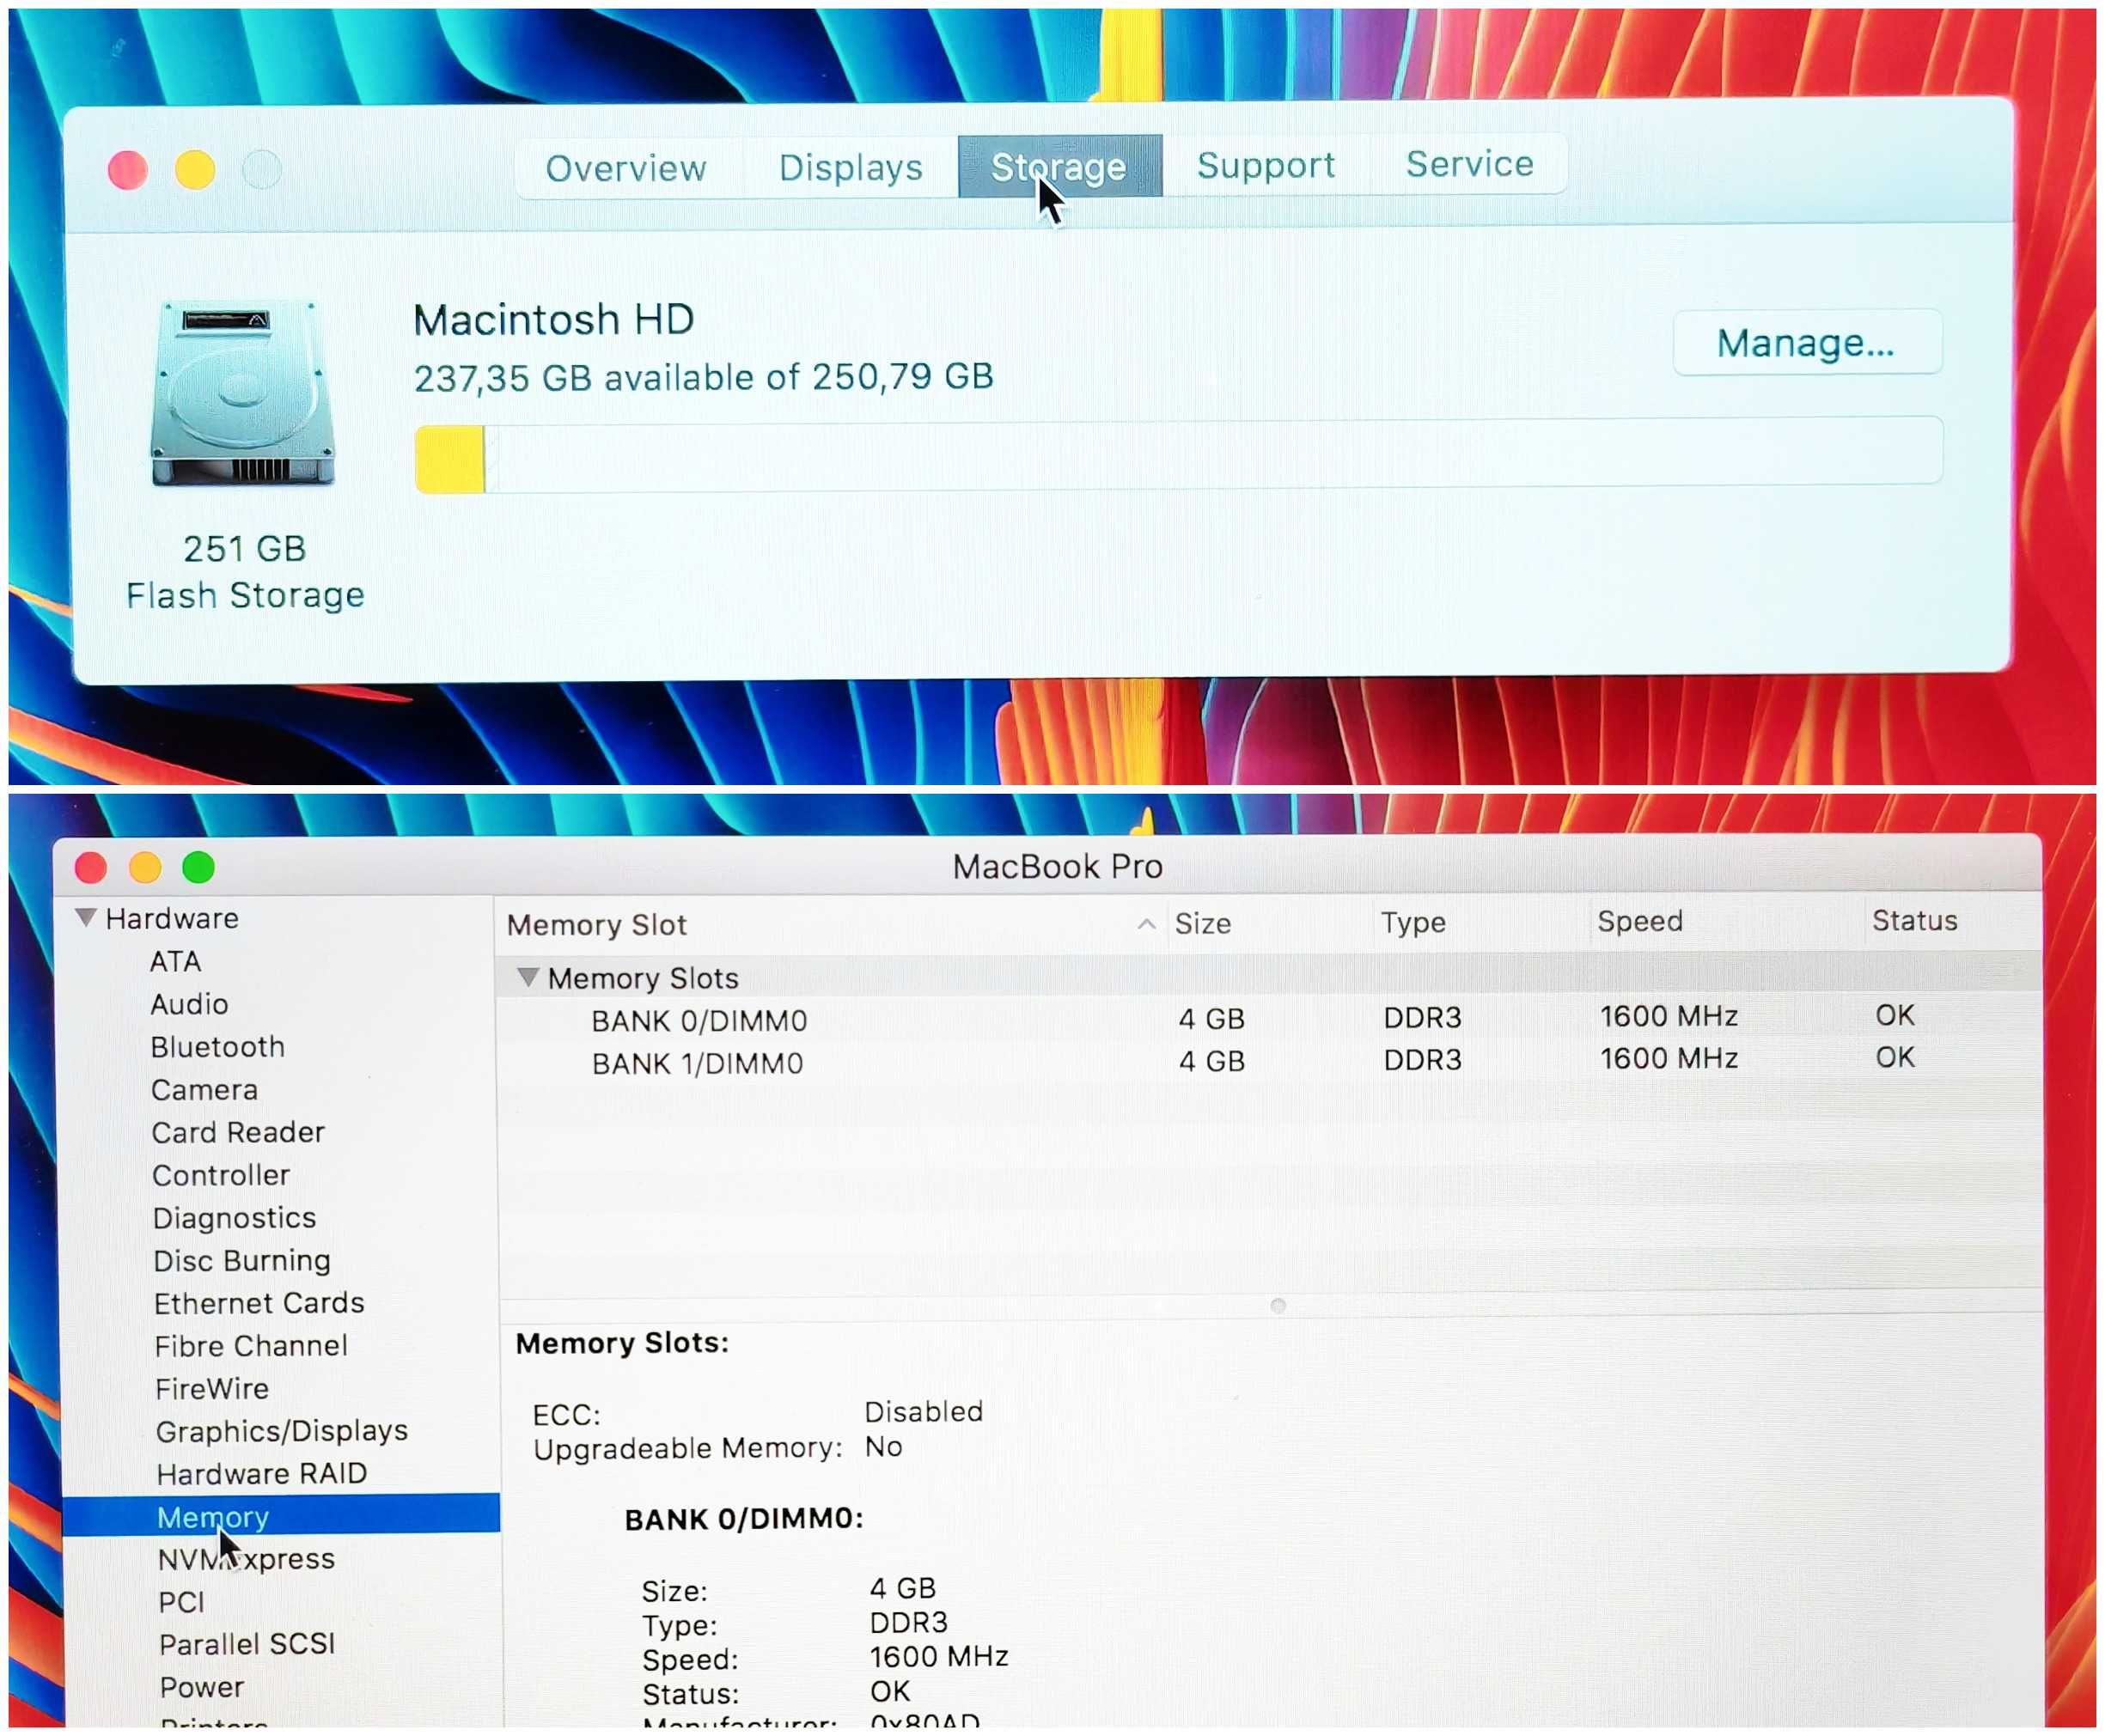 MacBook Pro 15.4 2013/8GB RAM/256GB SSD/2880x1800p Retina/A1398 НОВ